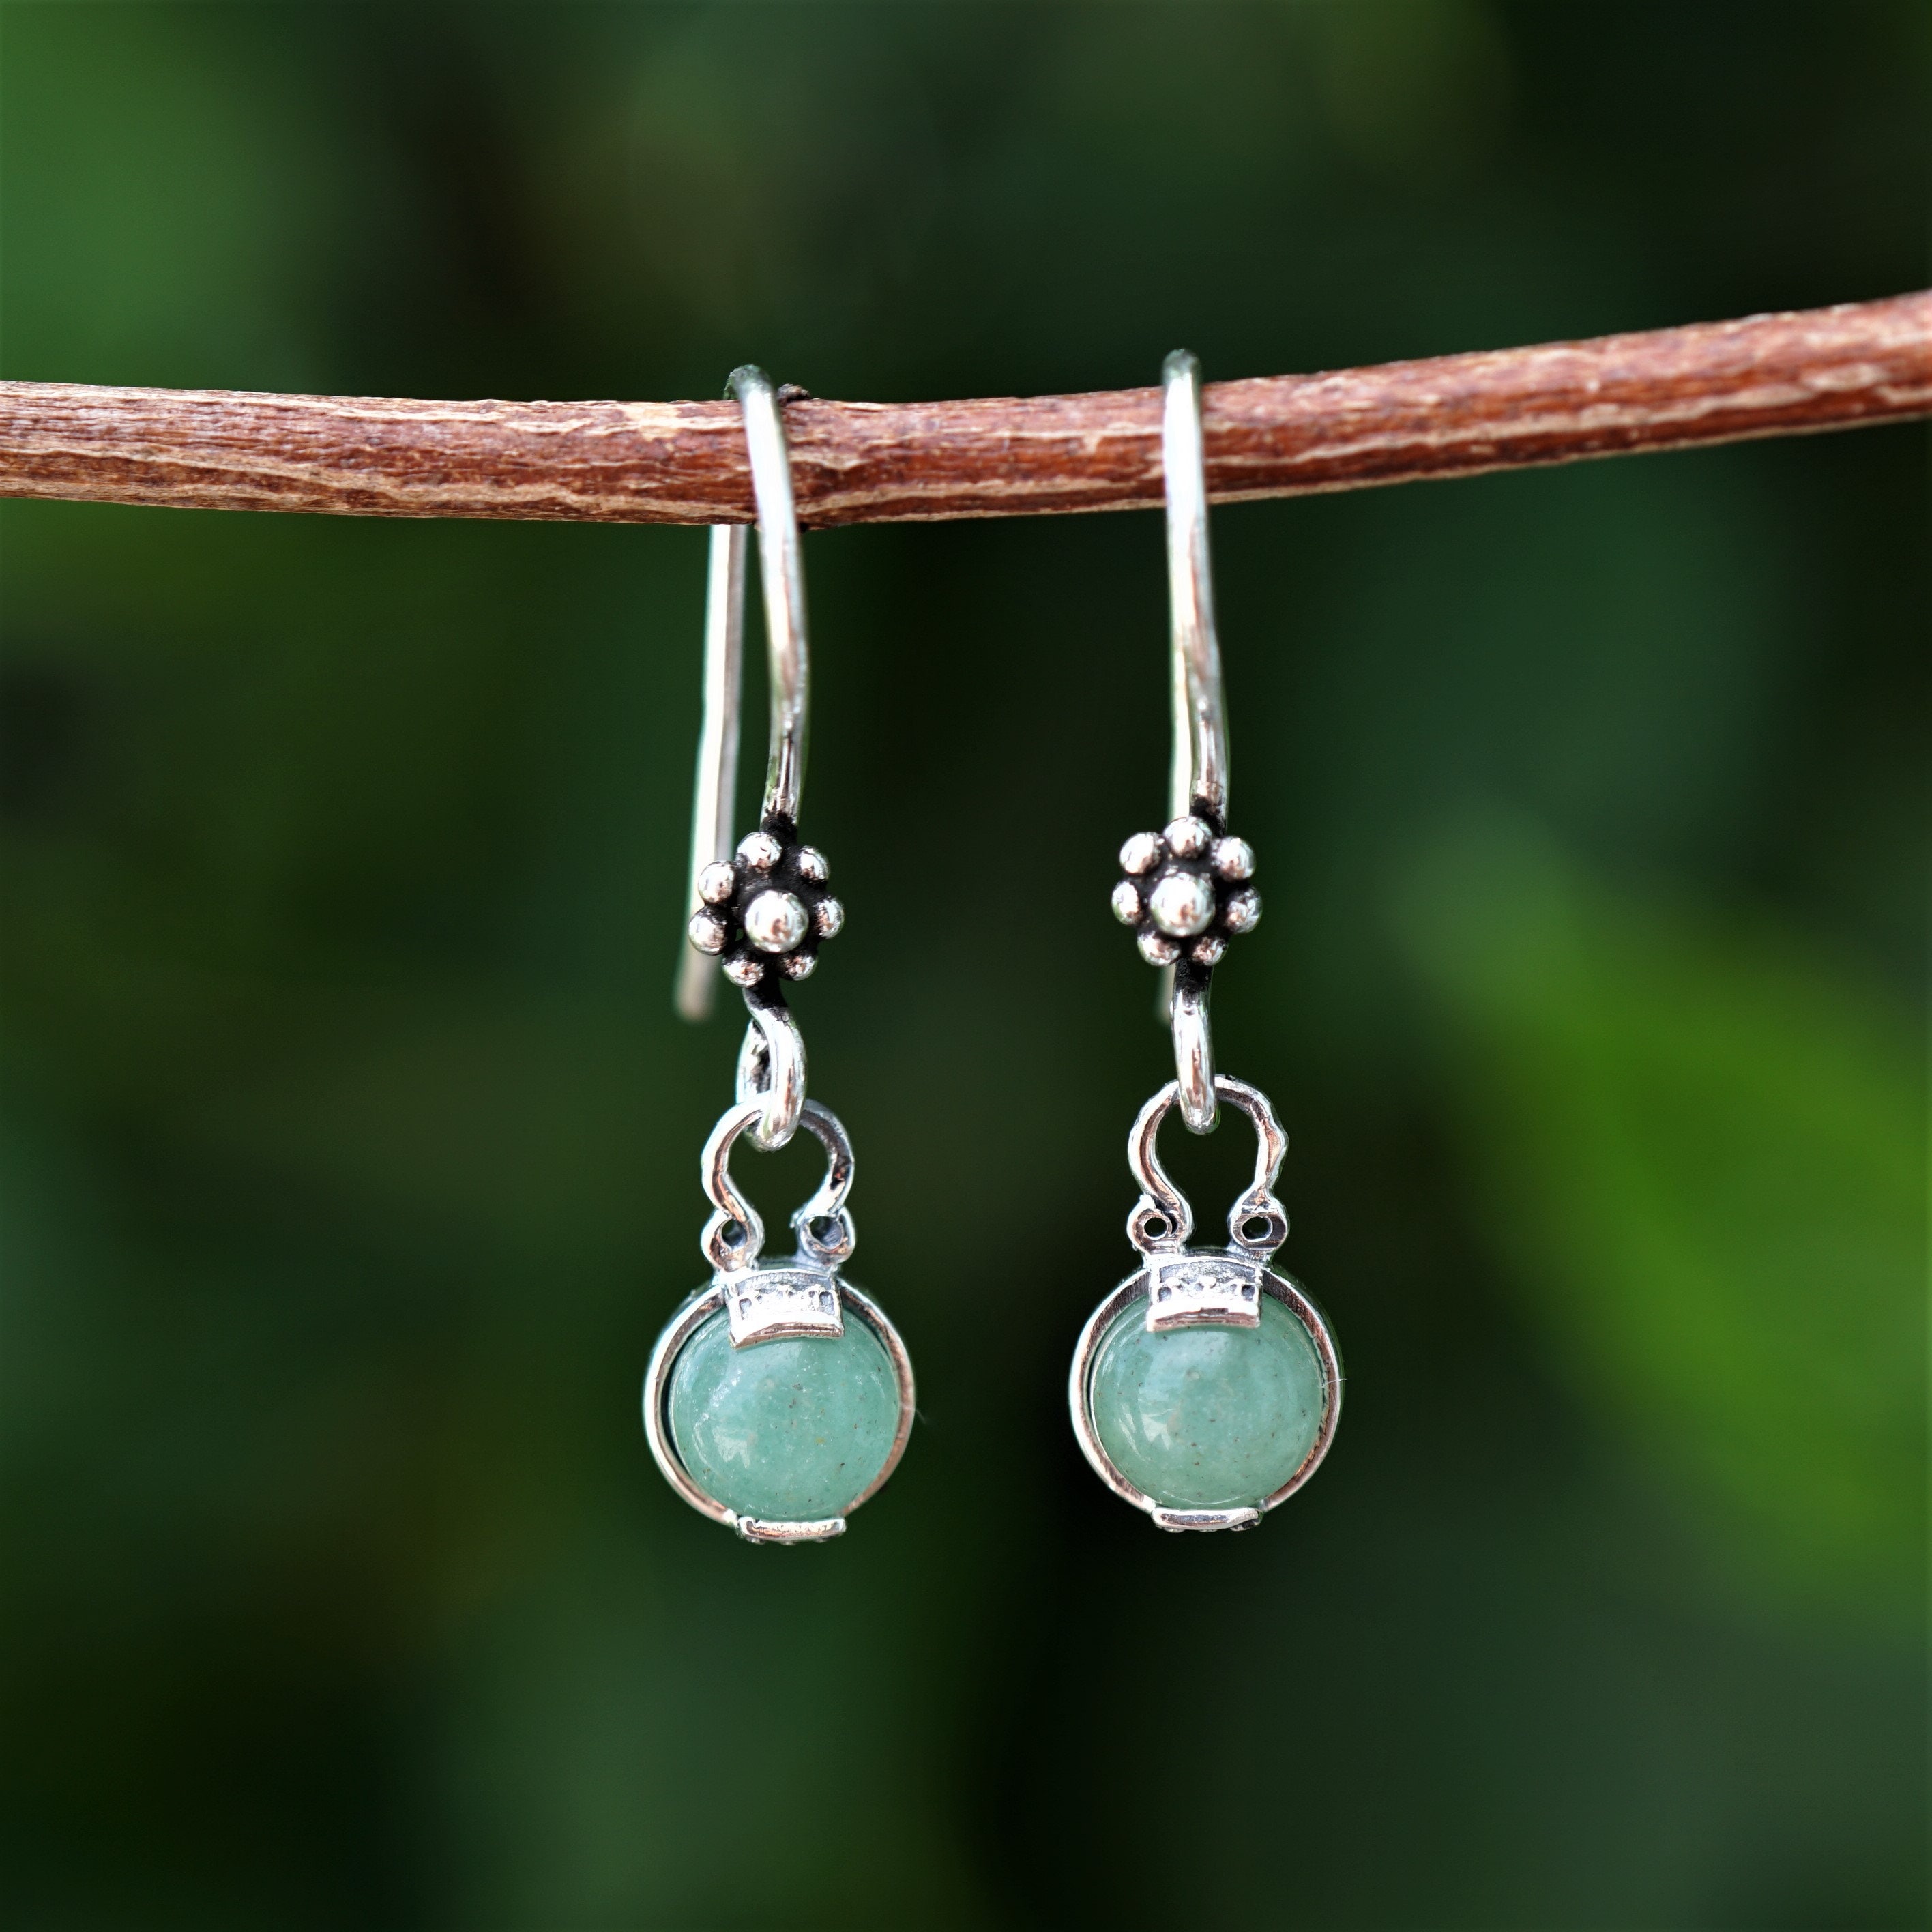 Details about   Sterling silver earrings,green aventurine w/green agate,handmade 